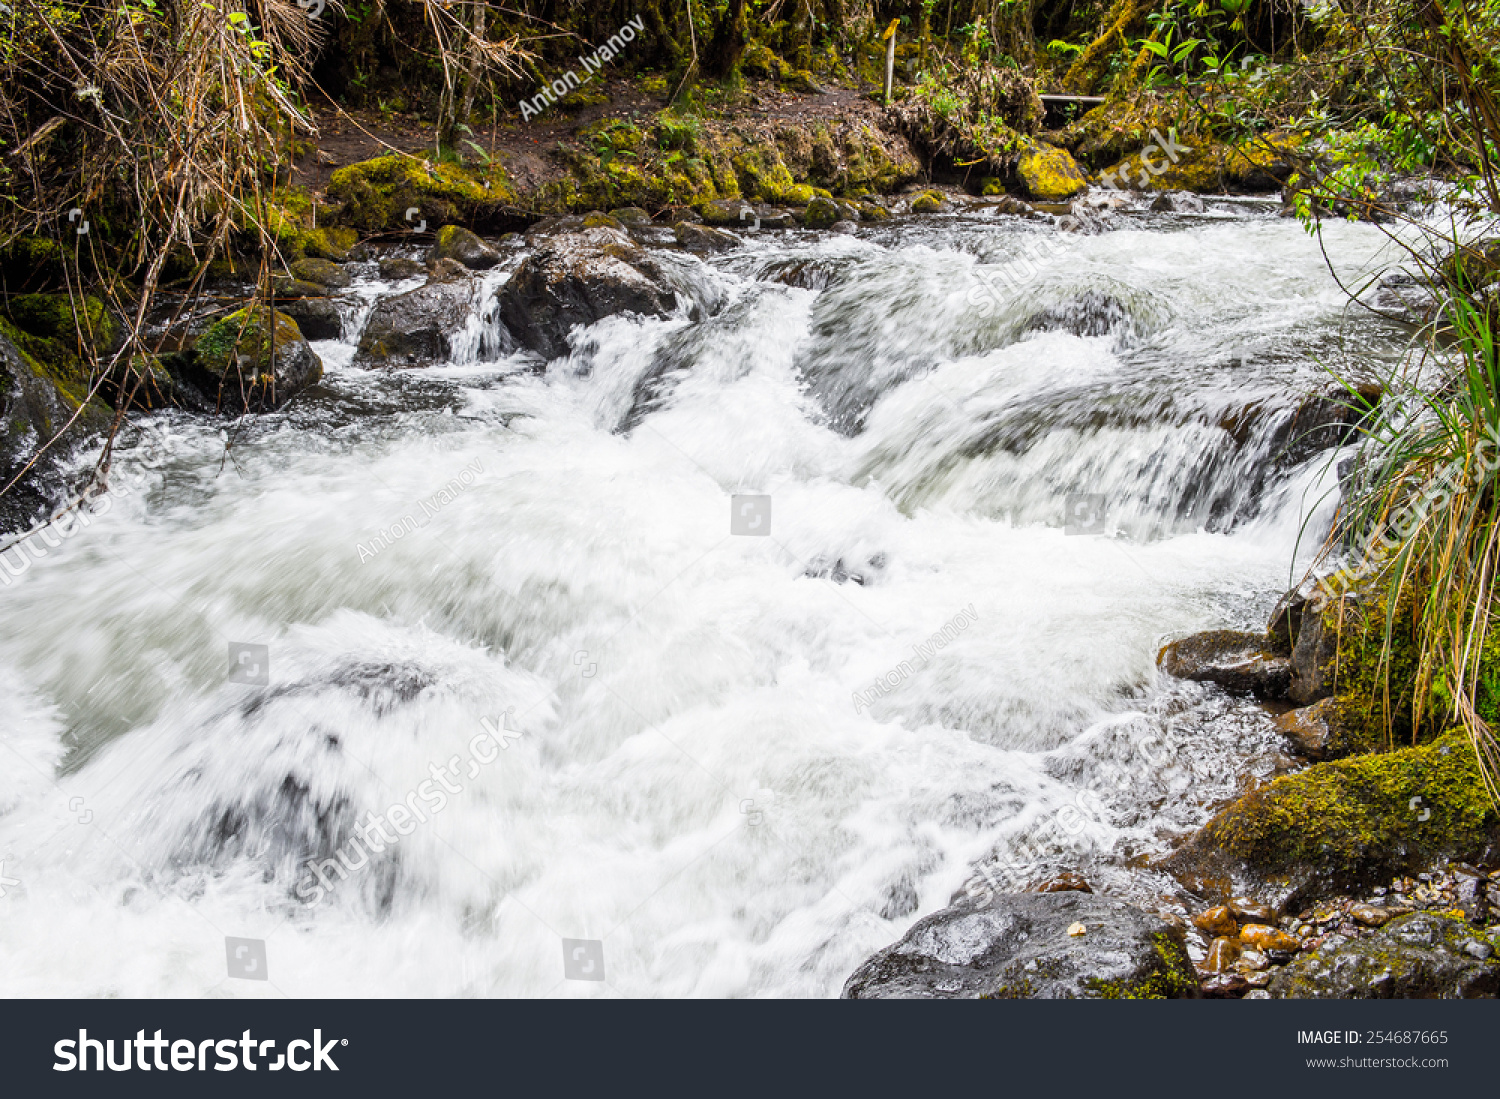 Edit Photos Free Online - Water creek | Shutterstock Editor